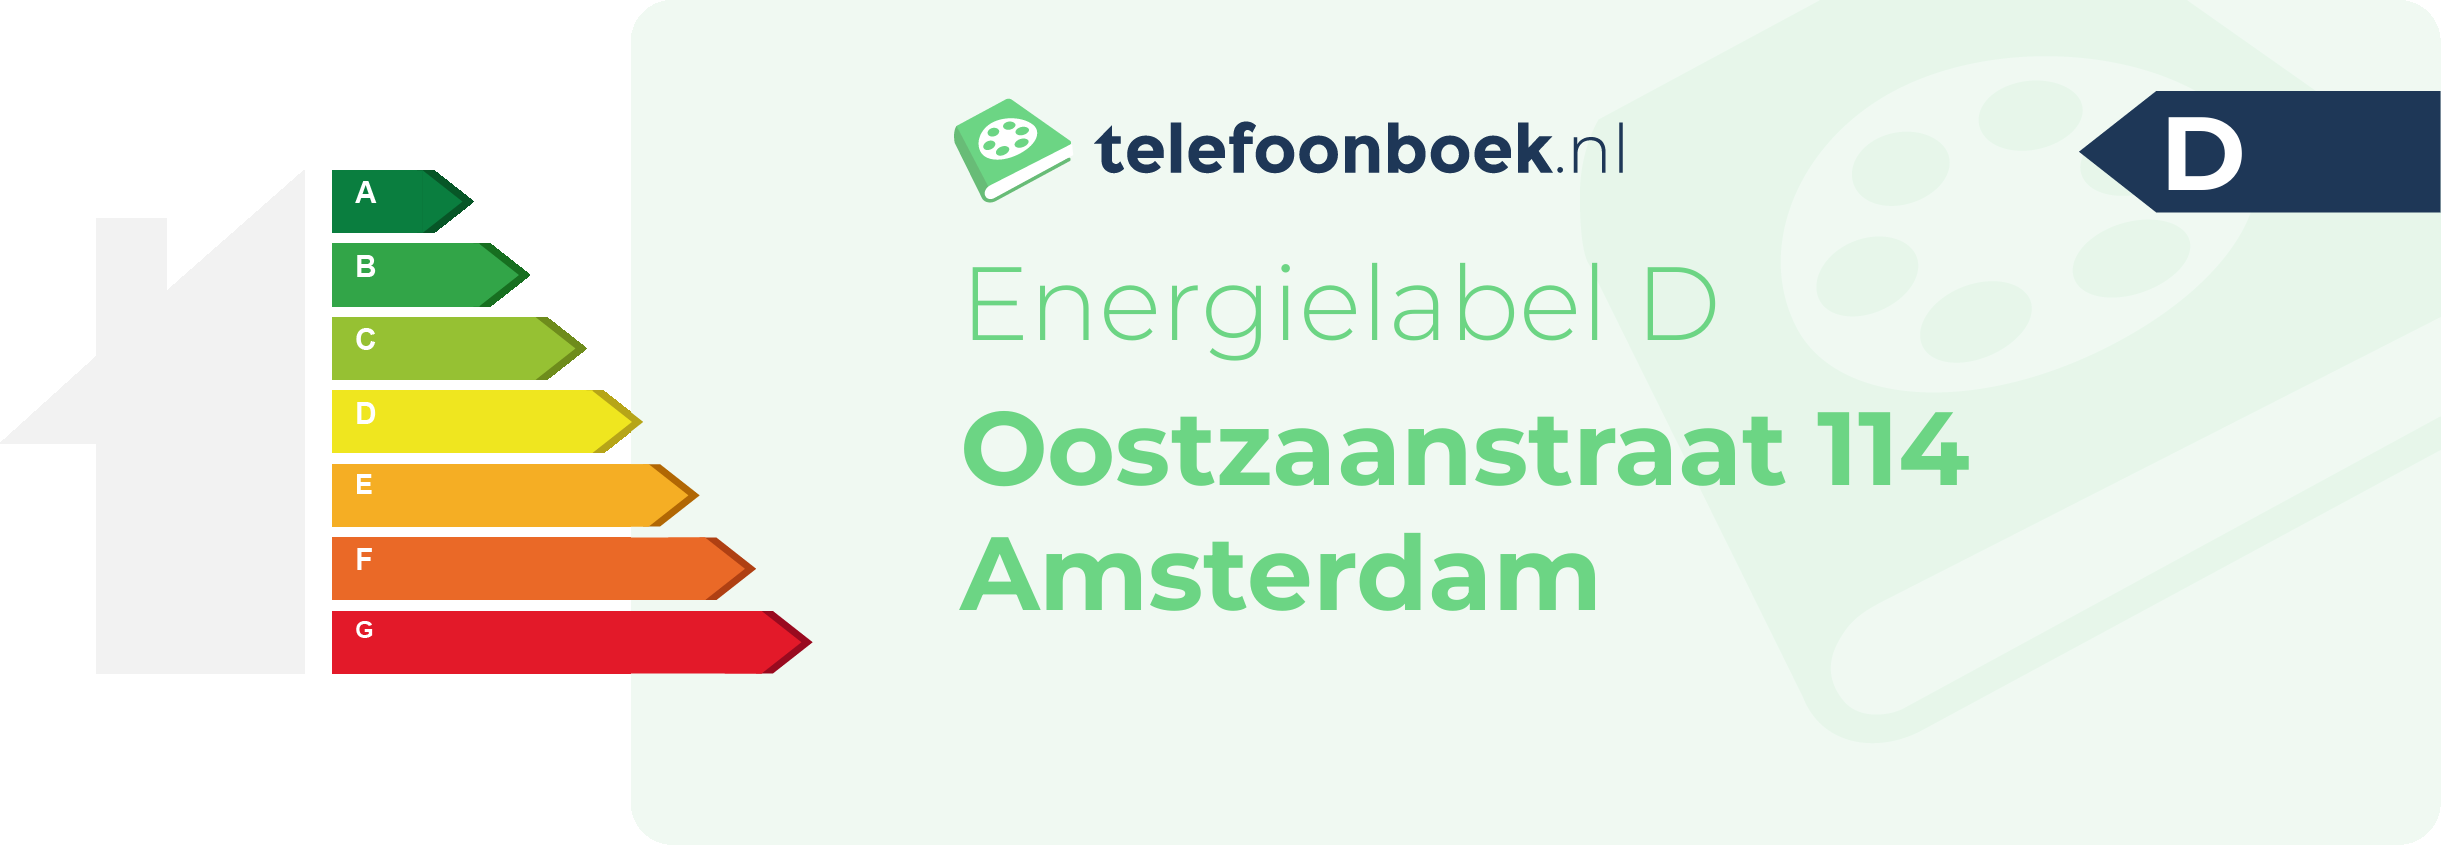 Energielabel Oostzaanstraat 114 Amsterdam